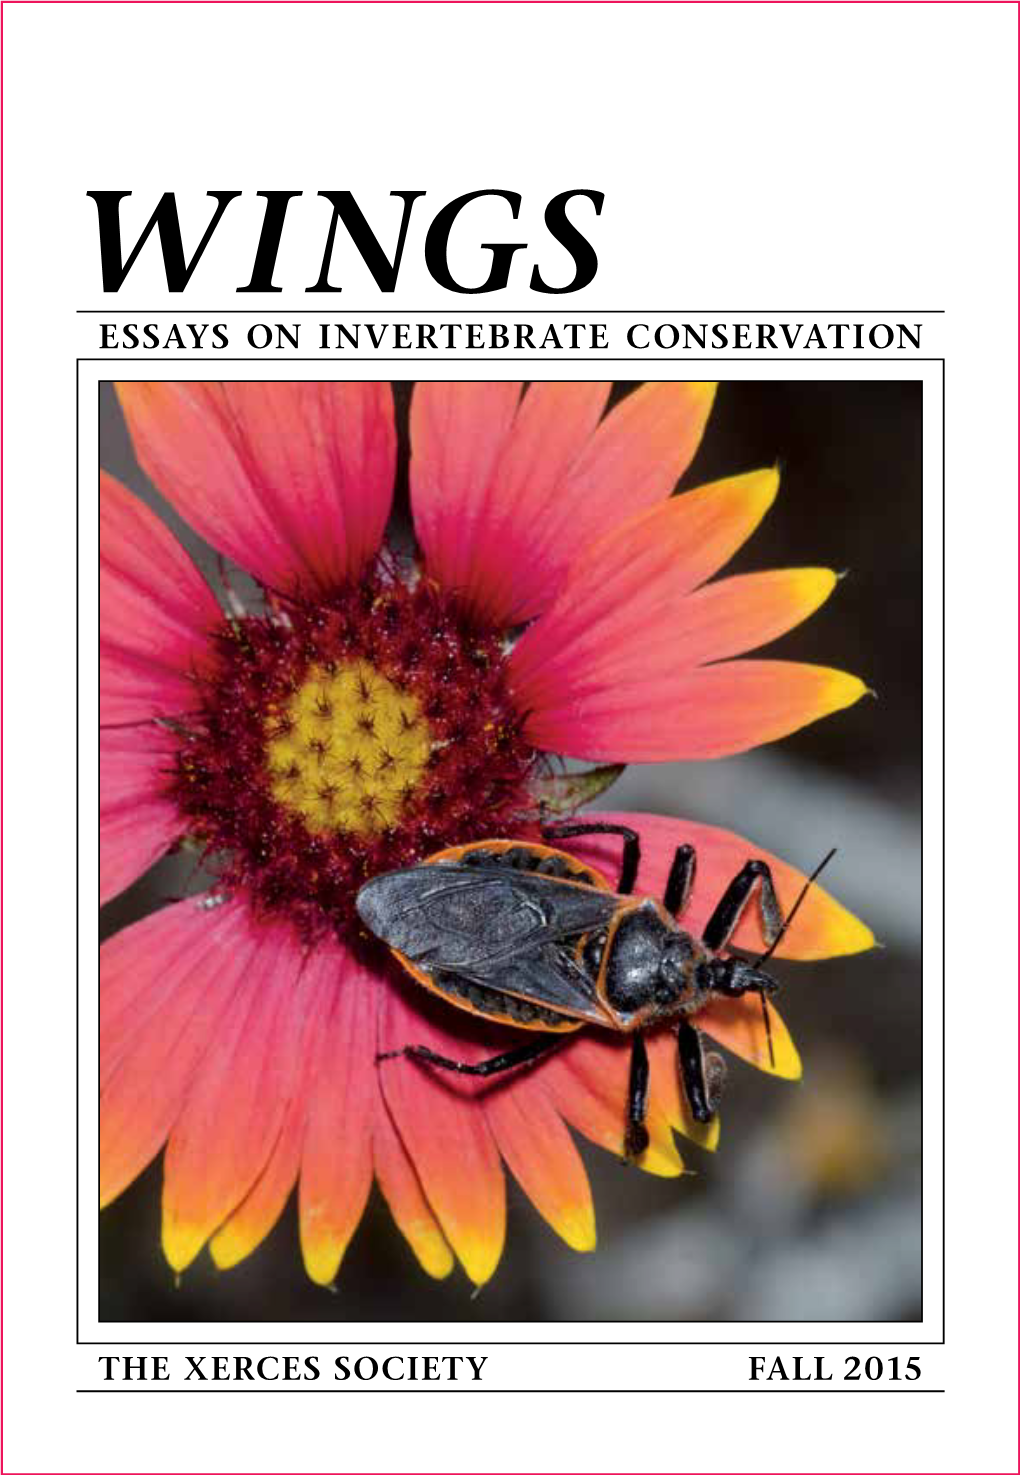 Essays on Invertebrate Conservation